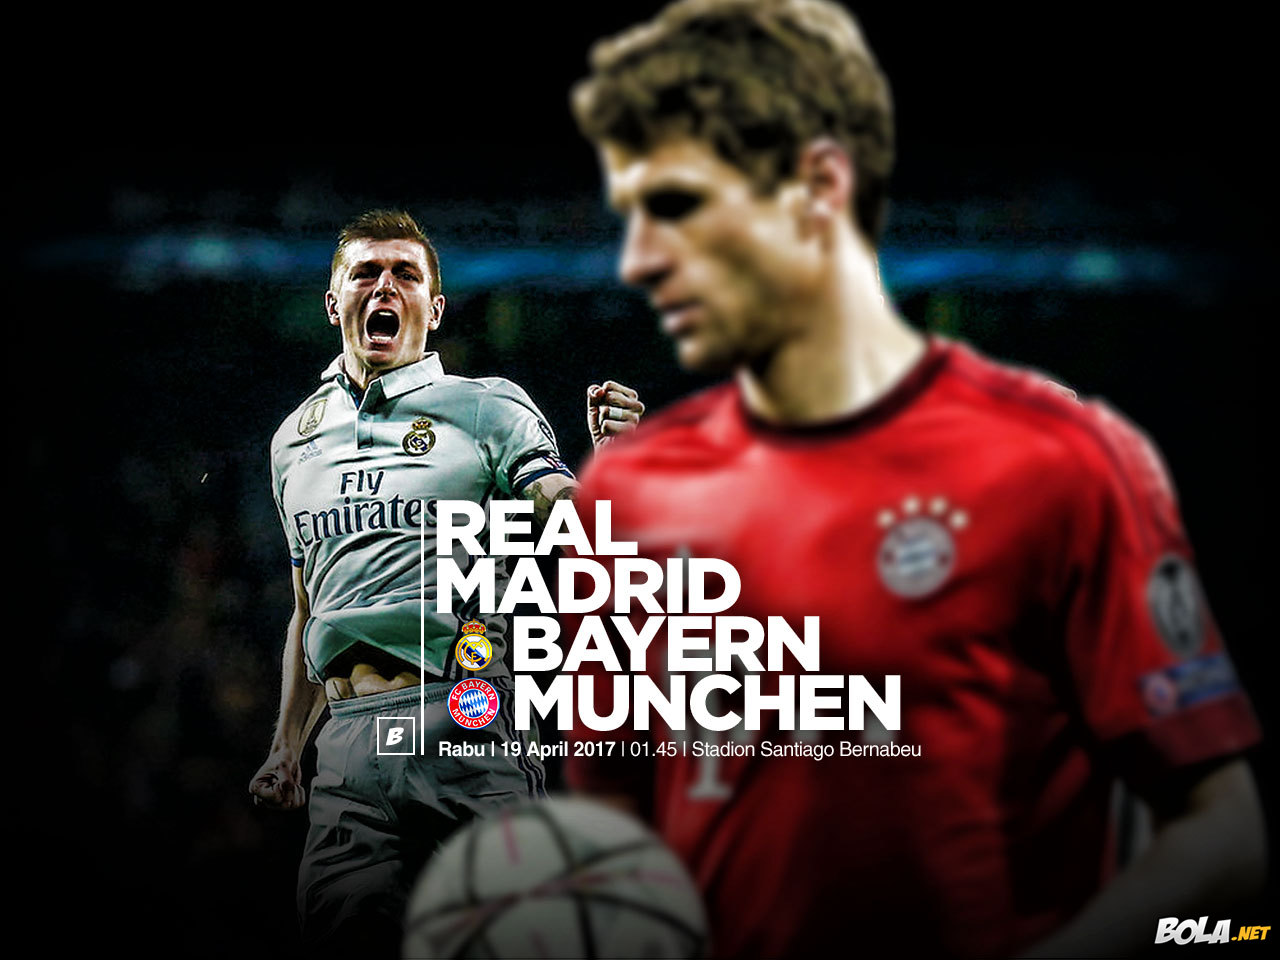 Deskripsi : Wallpaper Real Madrid Vs Bayern Munchen, size: 1280x960